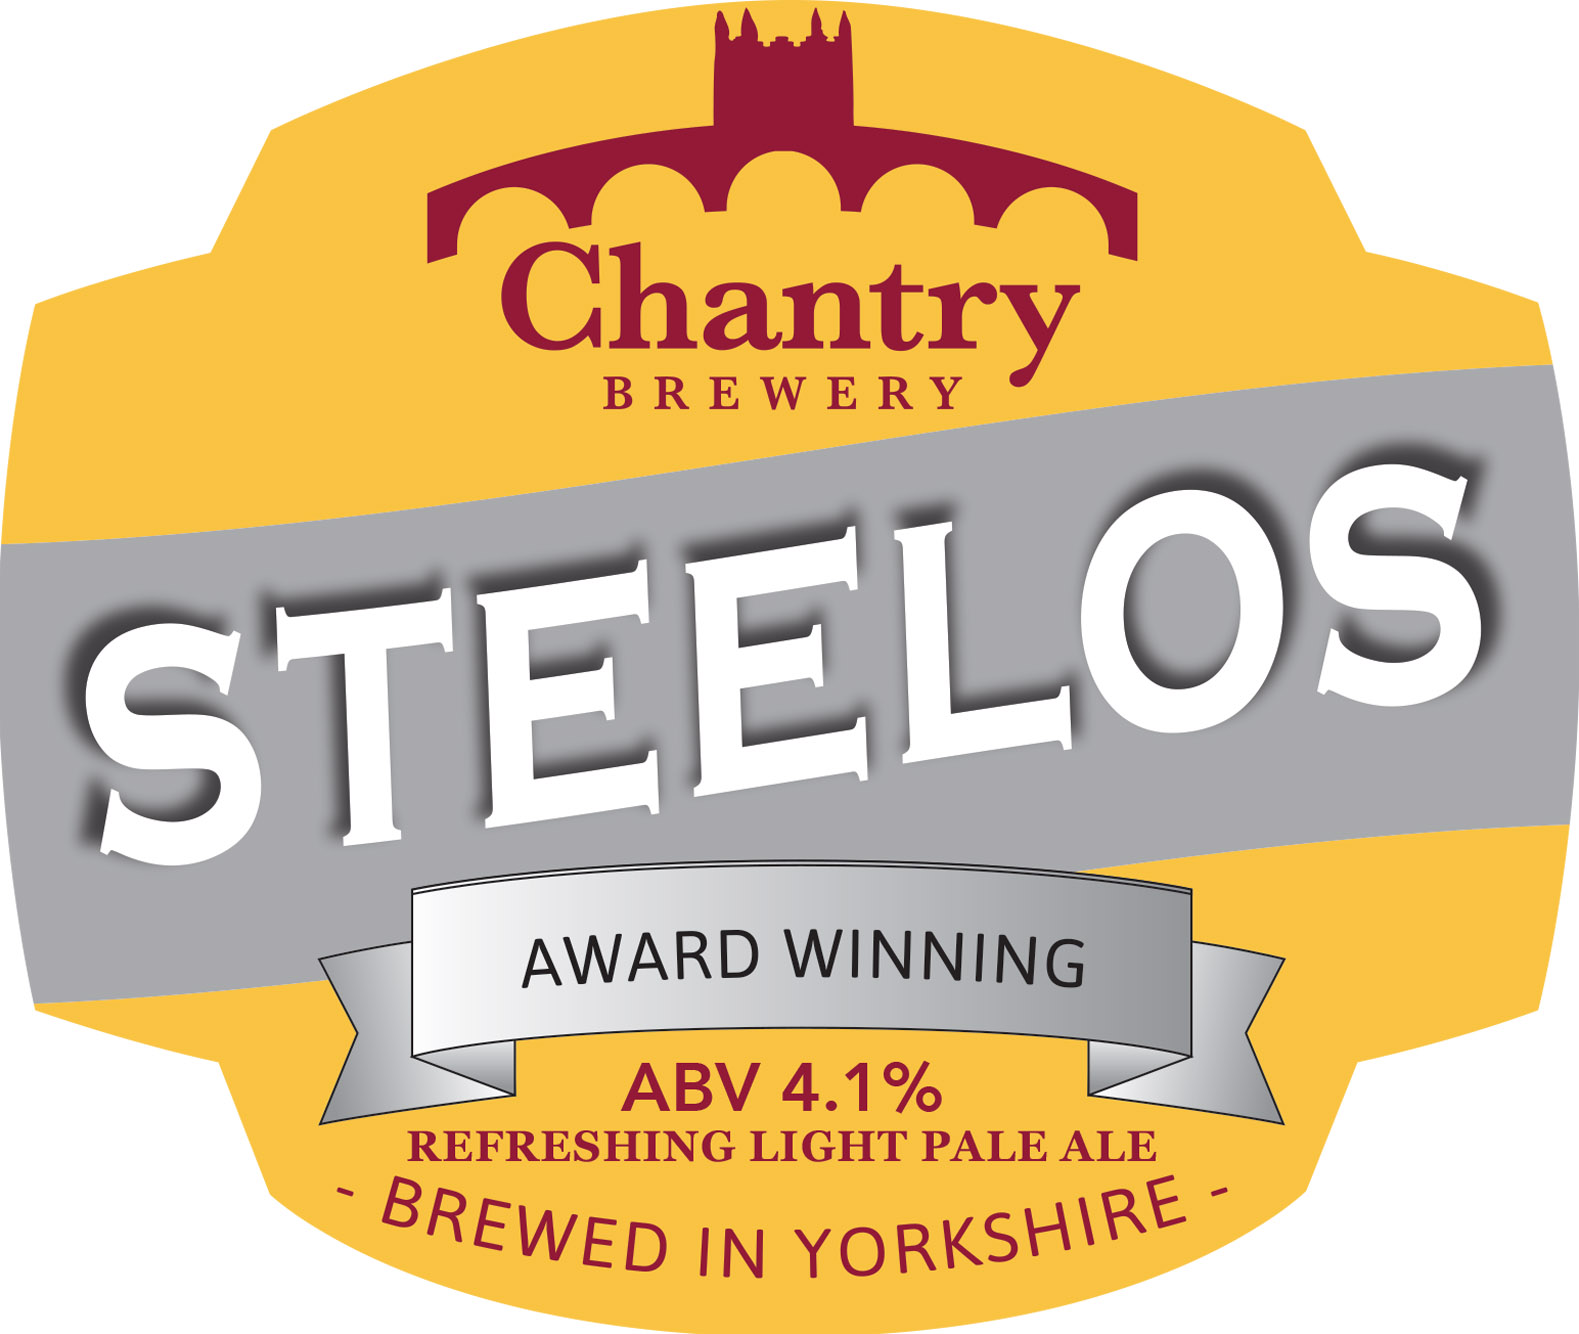 Chantry Brewery Steelos Real Ale pump clip